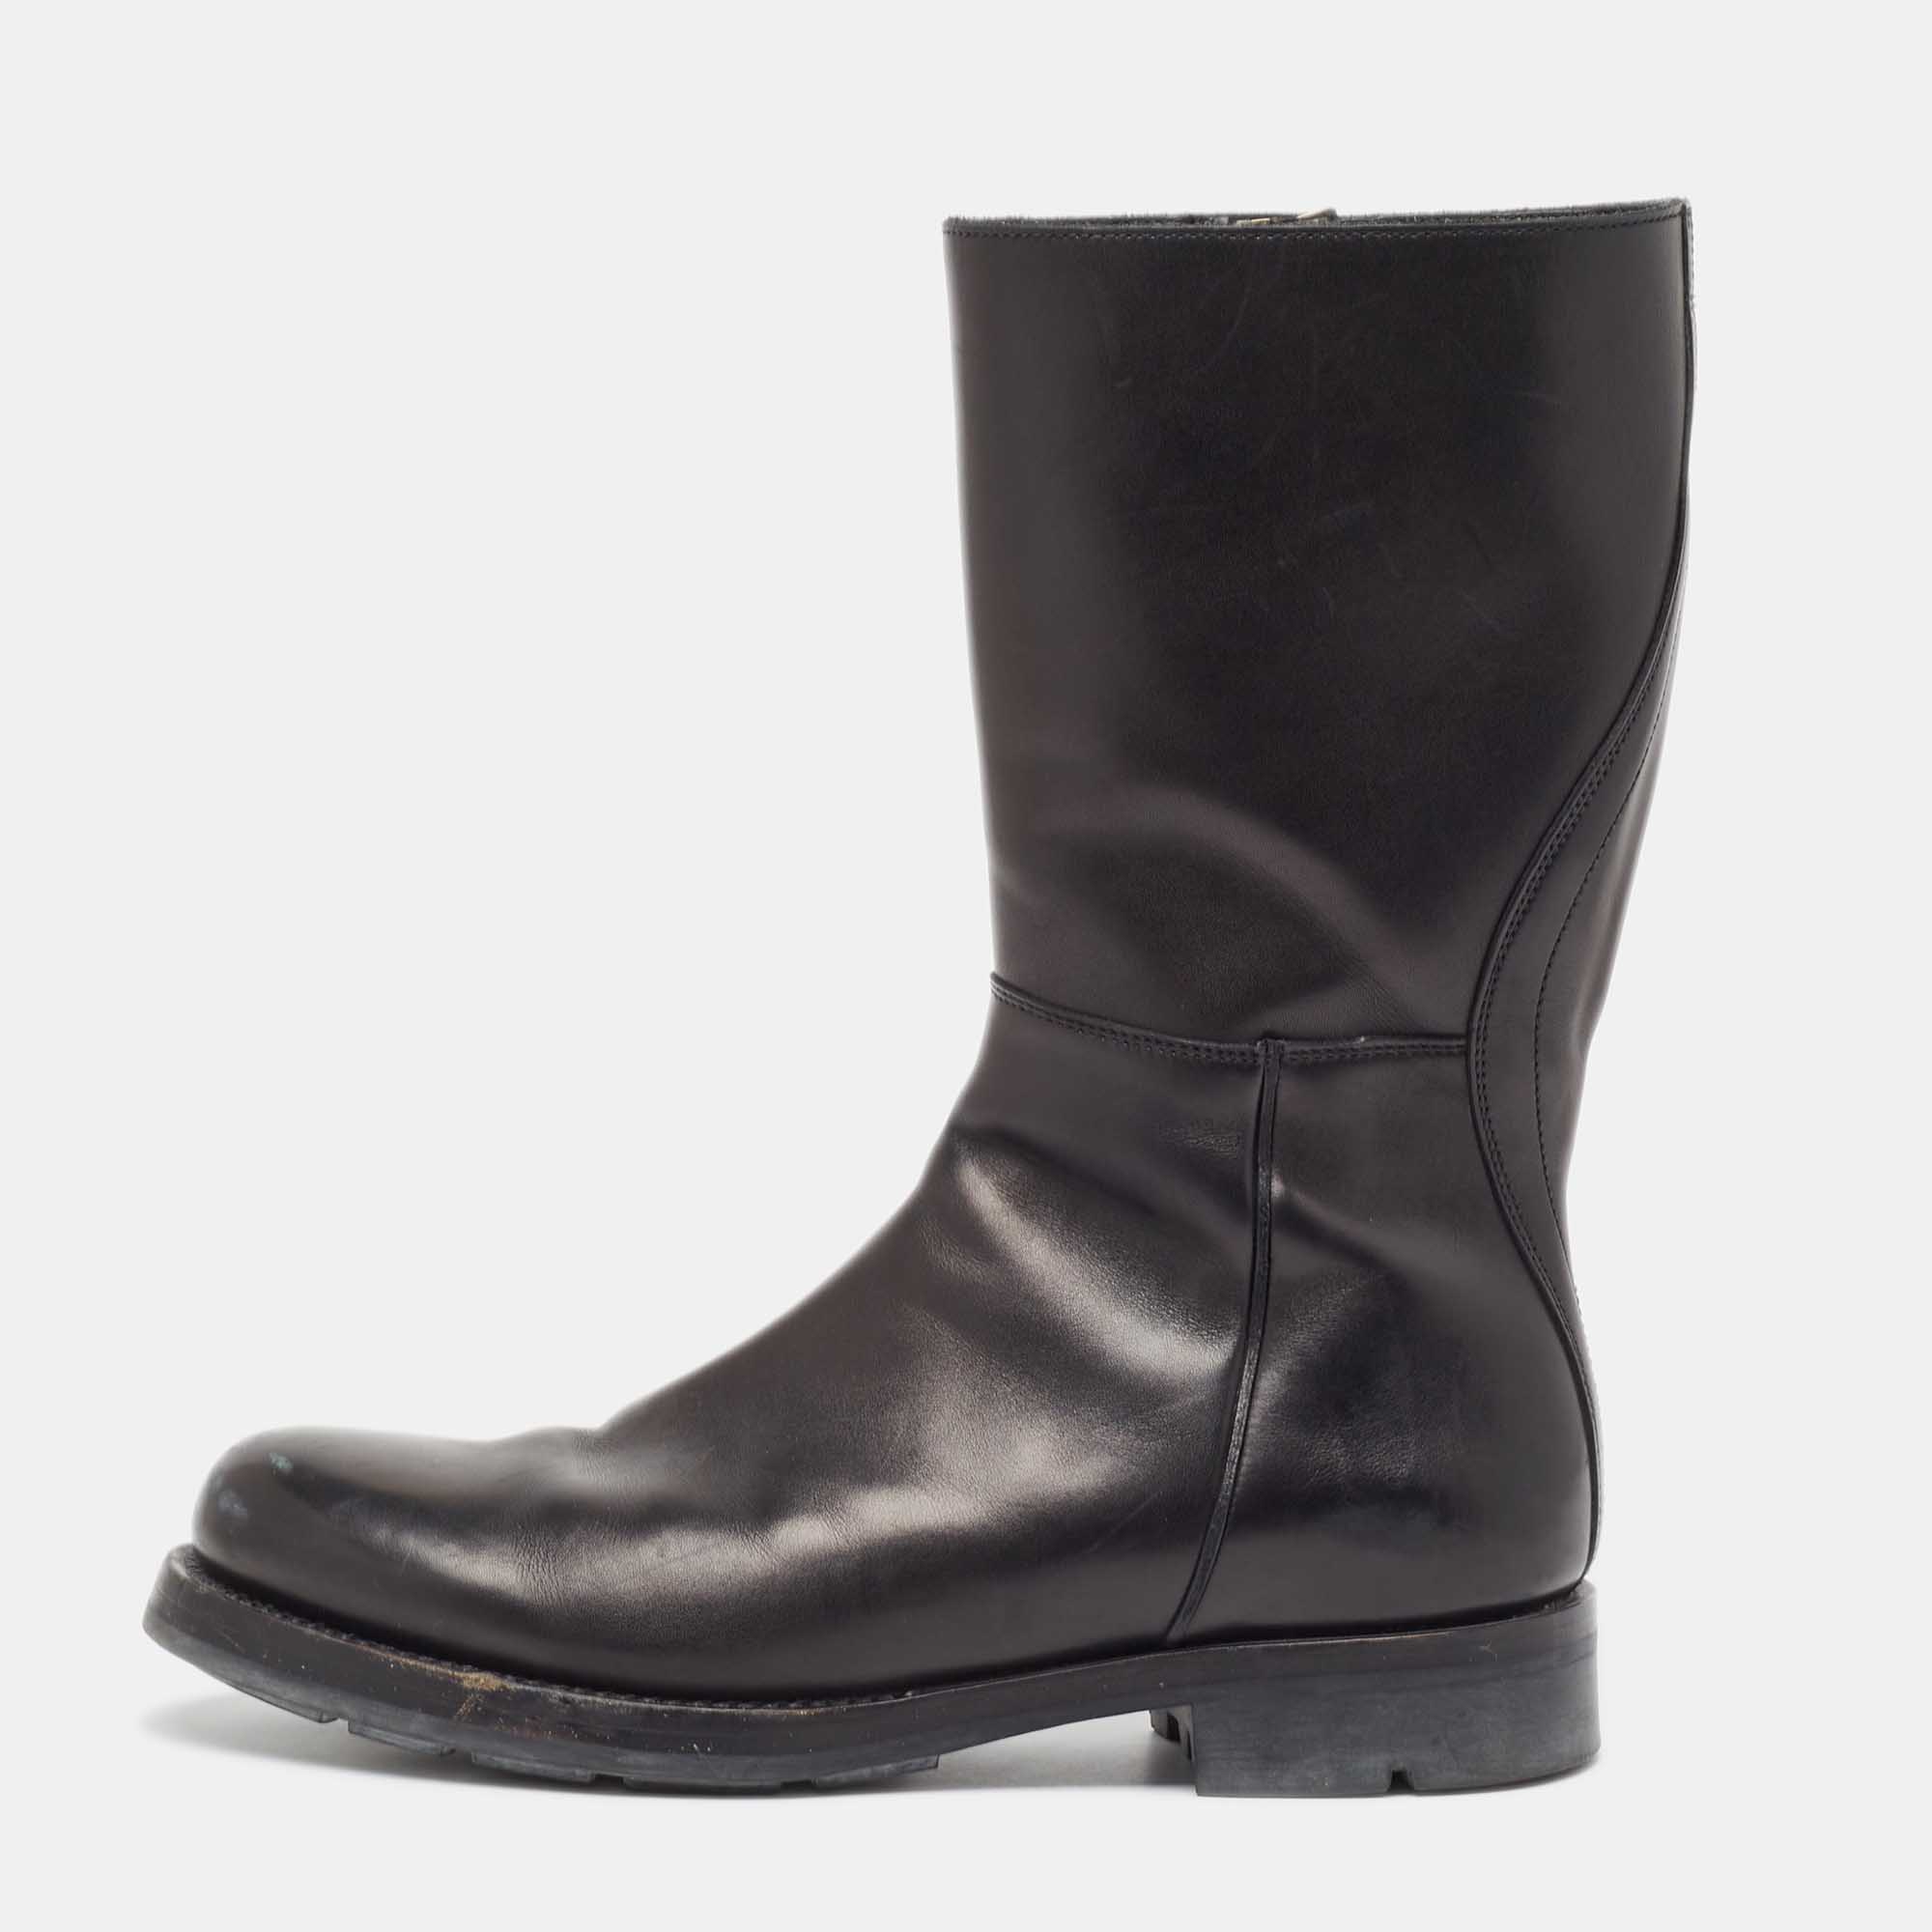 Prada black leather midcalf boots size 42